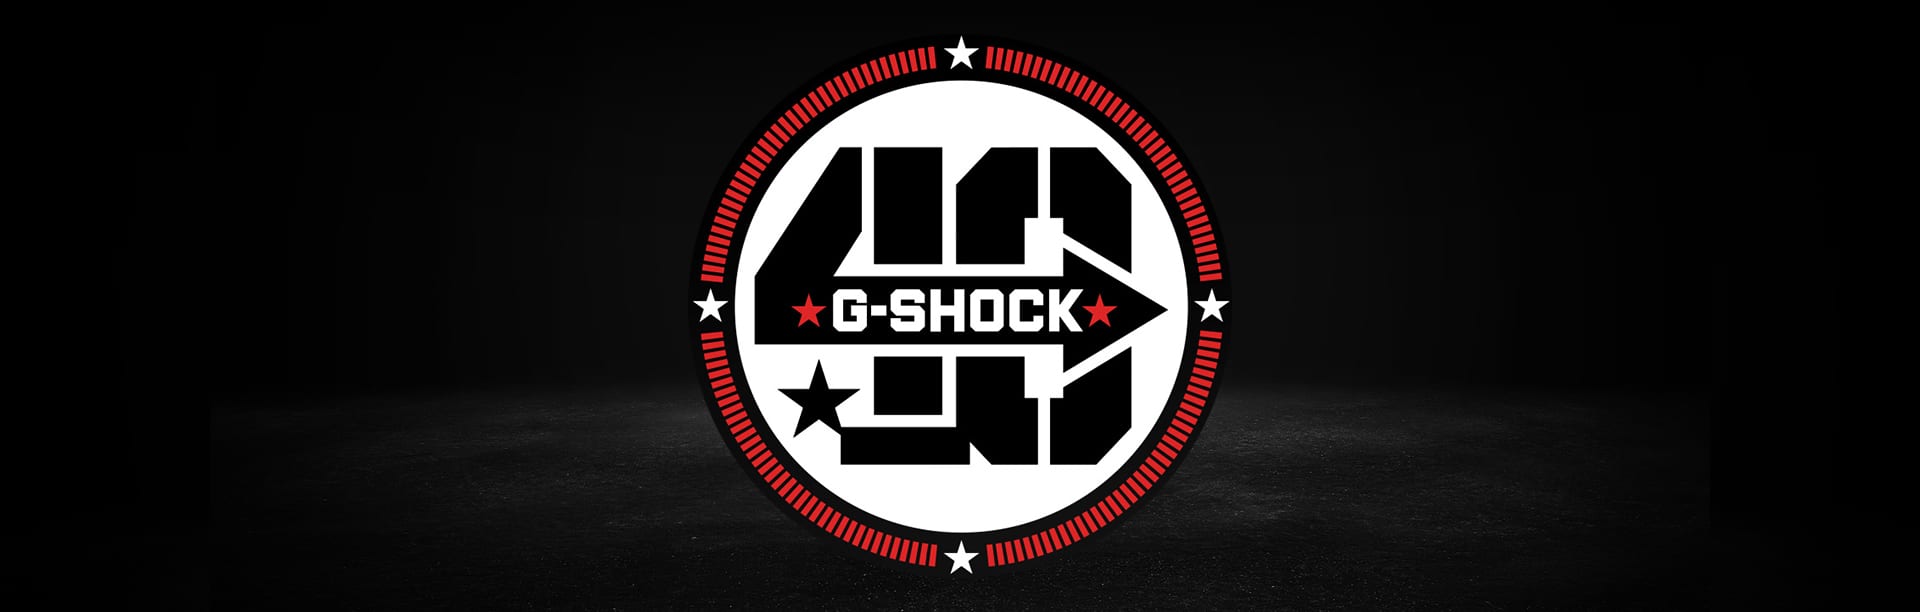 G-SHOCK 40th anniversary logo